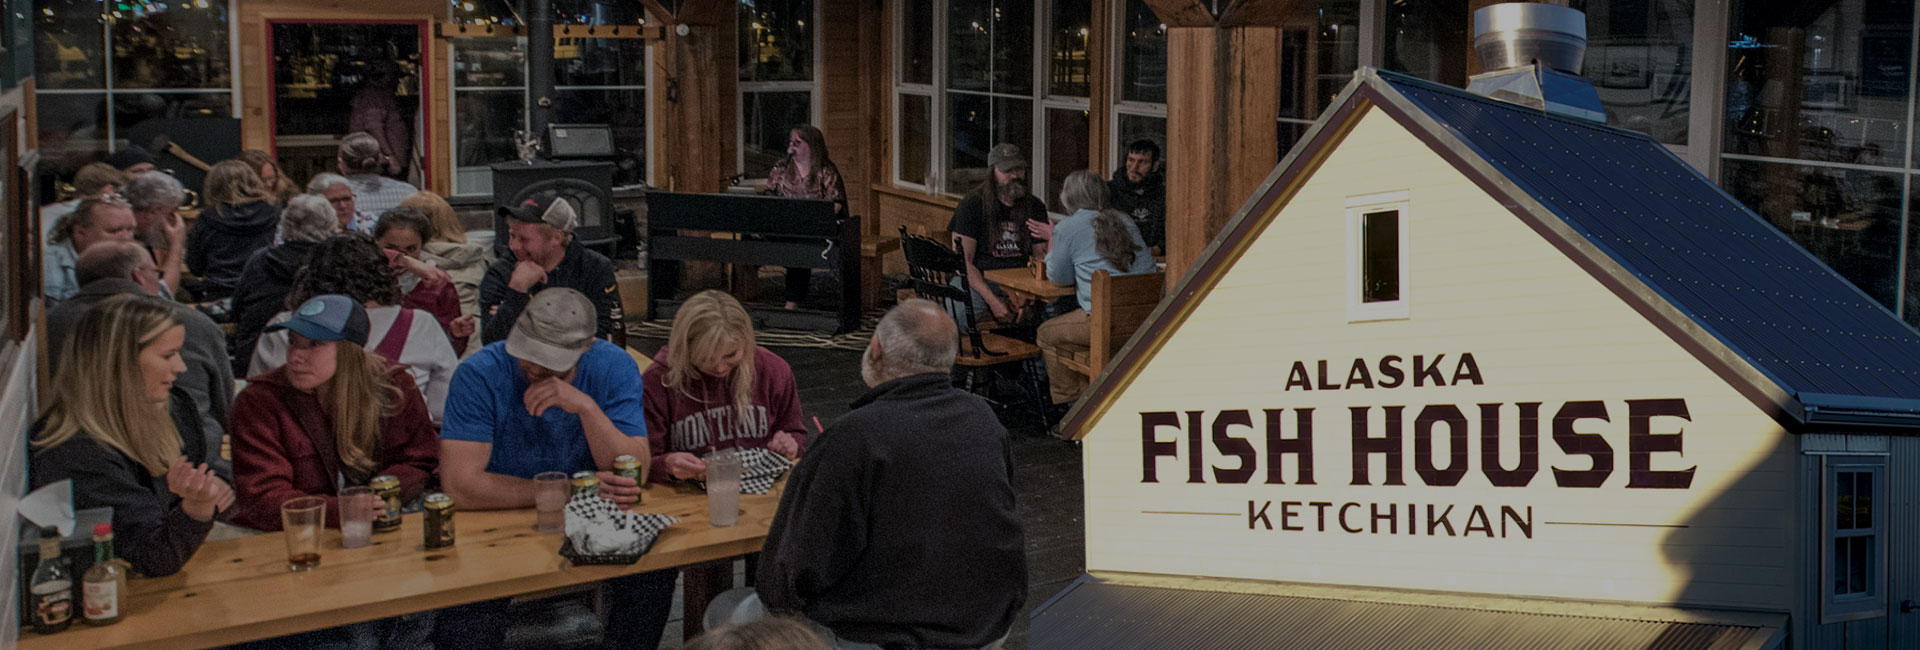 Alaska Fish House seafood dining